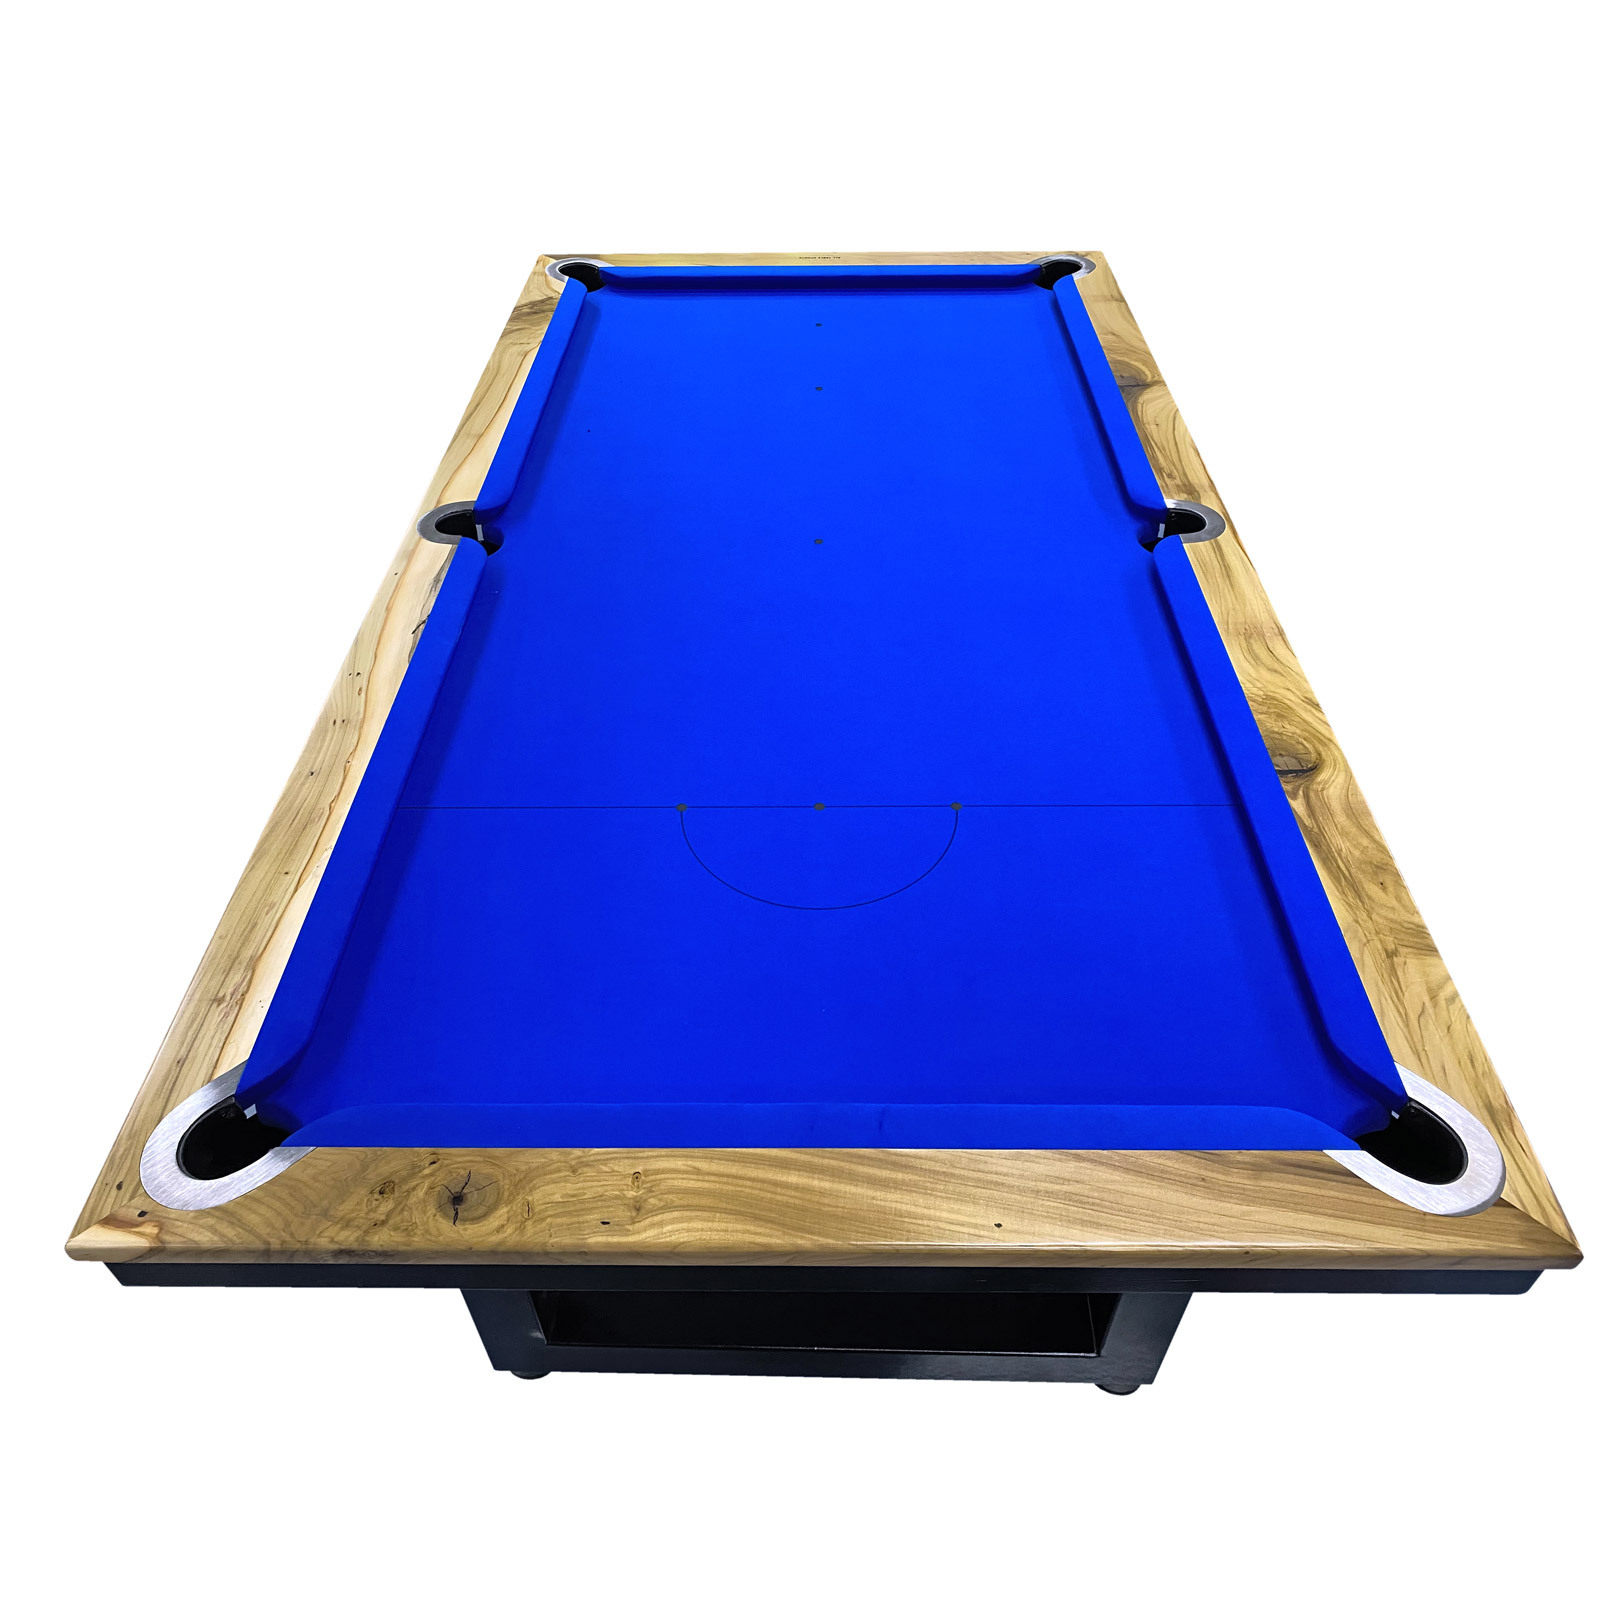 Pre-made 8 Foot Slate Odyssey Pool Billiards Table, Poplar timber